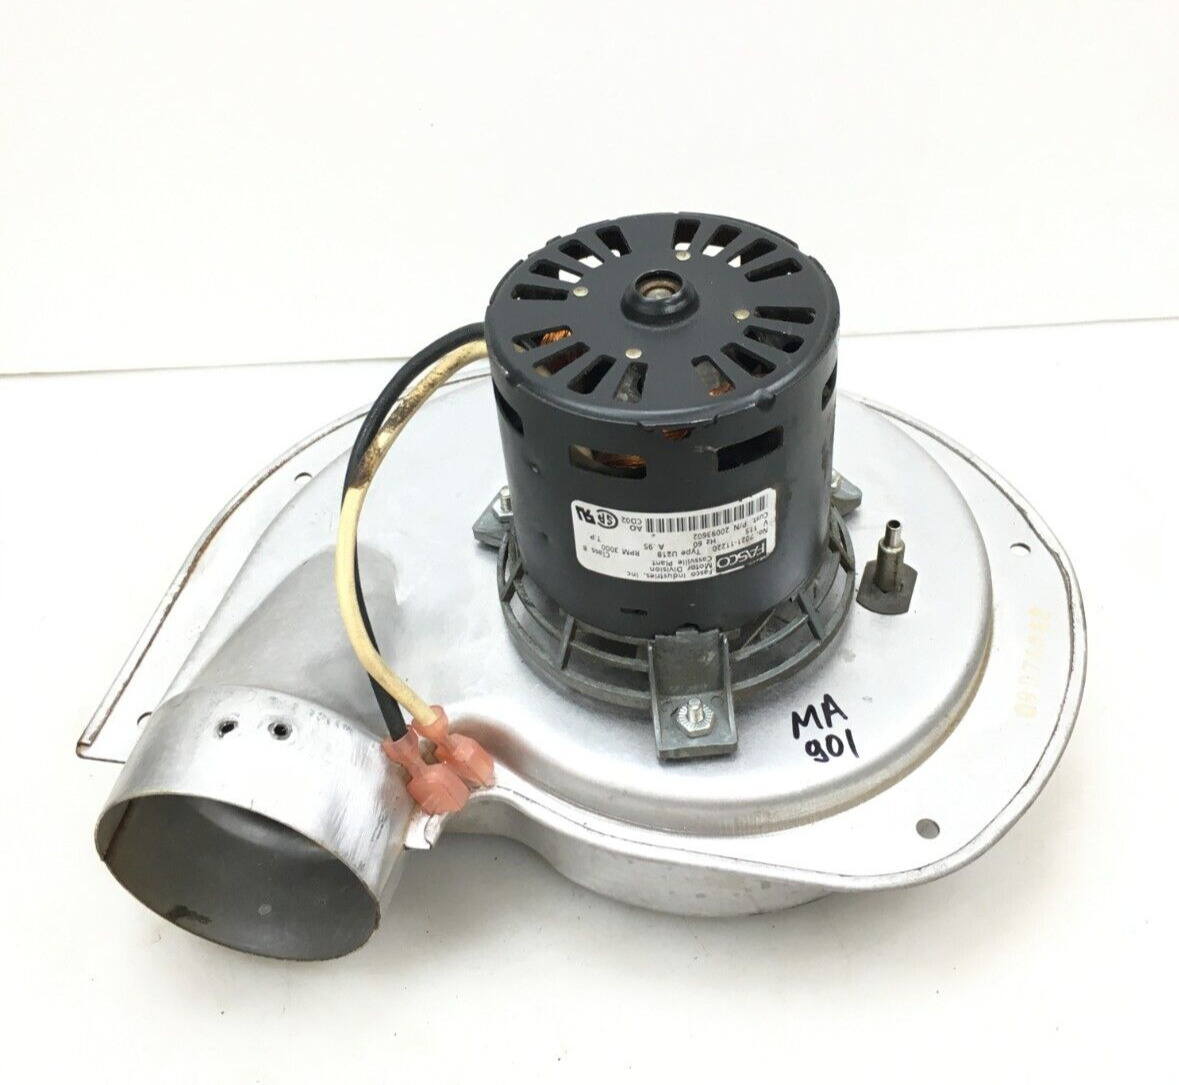 FASCO 7021-11220 Draft Inducer Blower Motor Assembly 115V 20093602 used #MA901